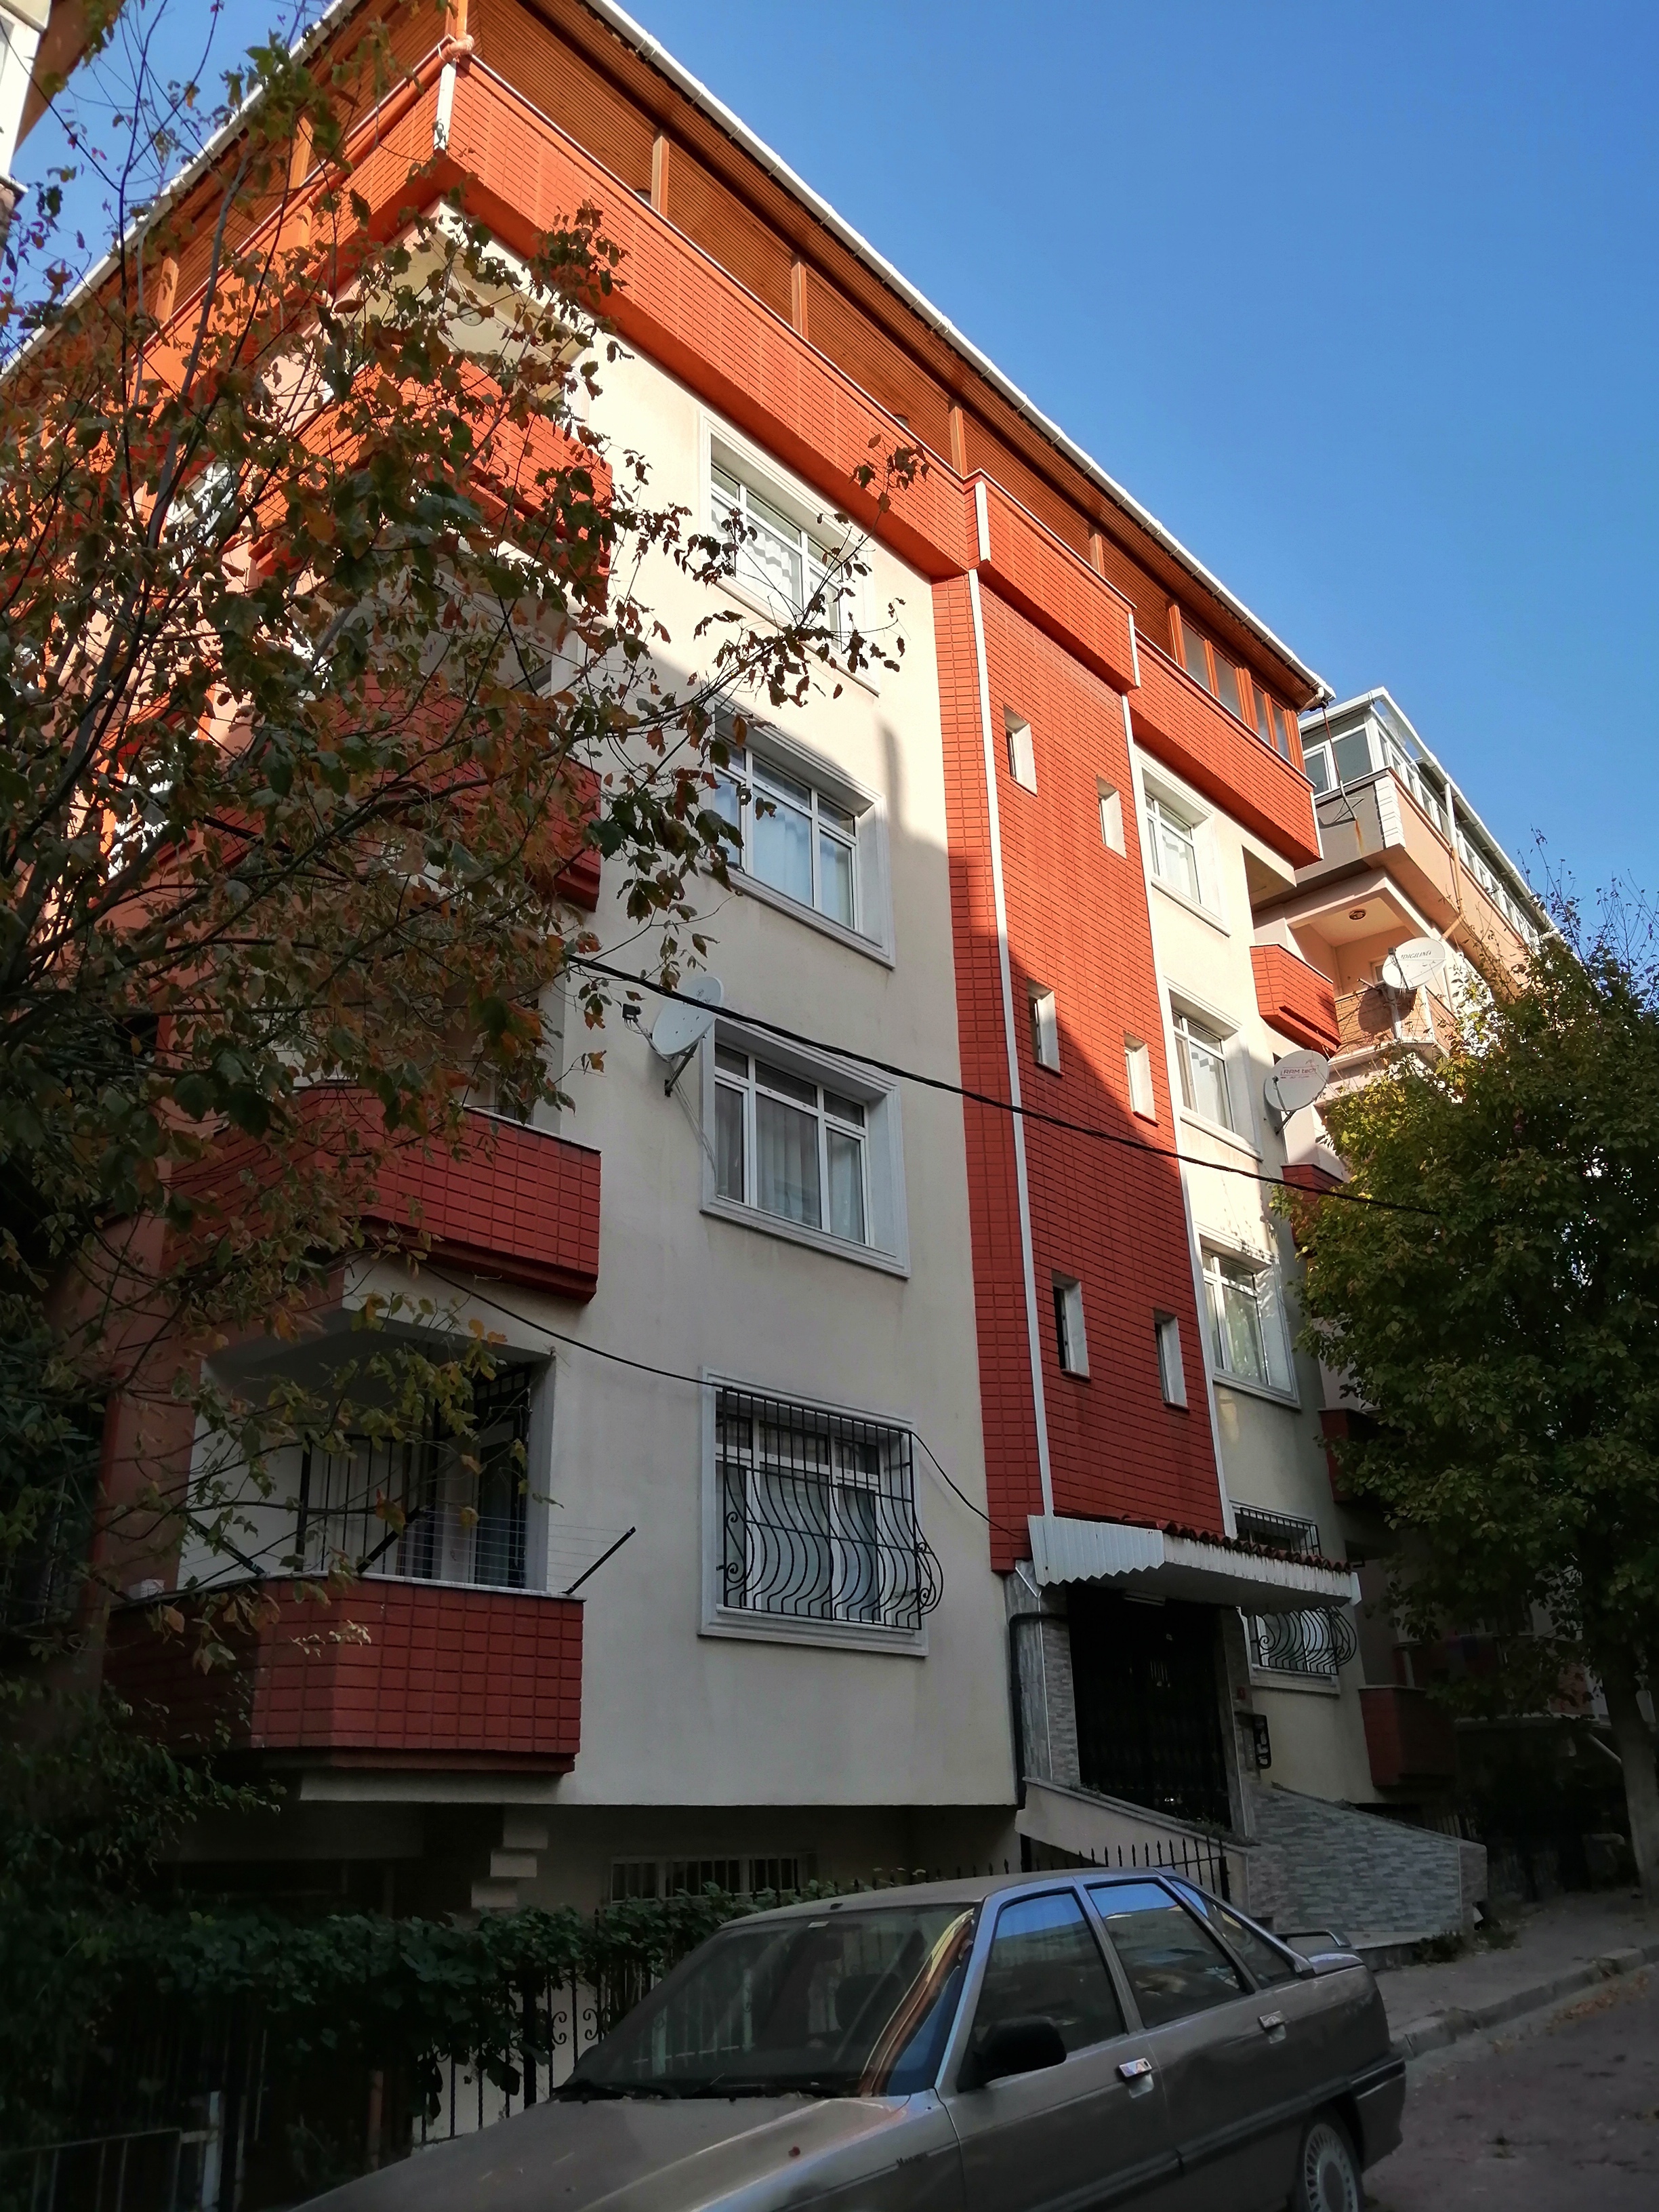 Flat for Land Project, Avcılar, Sebzeci Street  -2  apartment